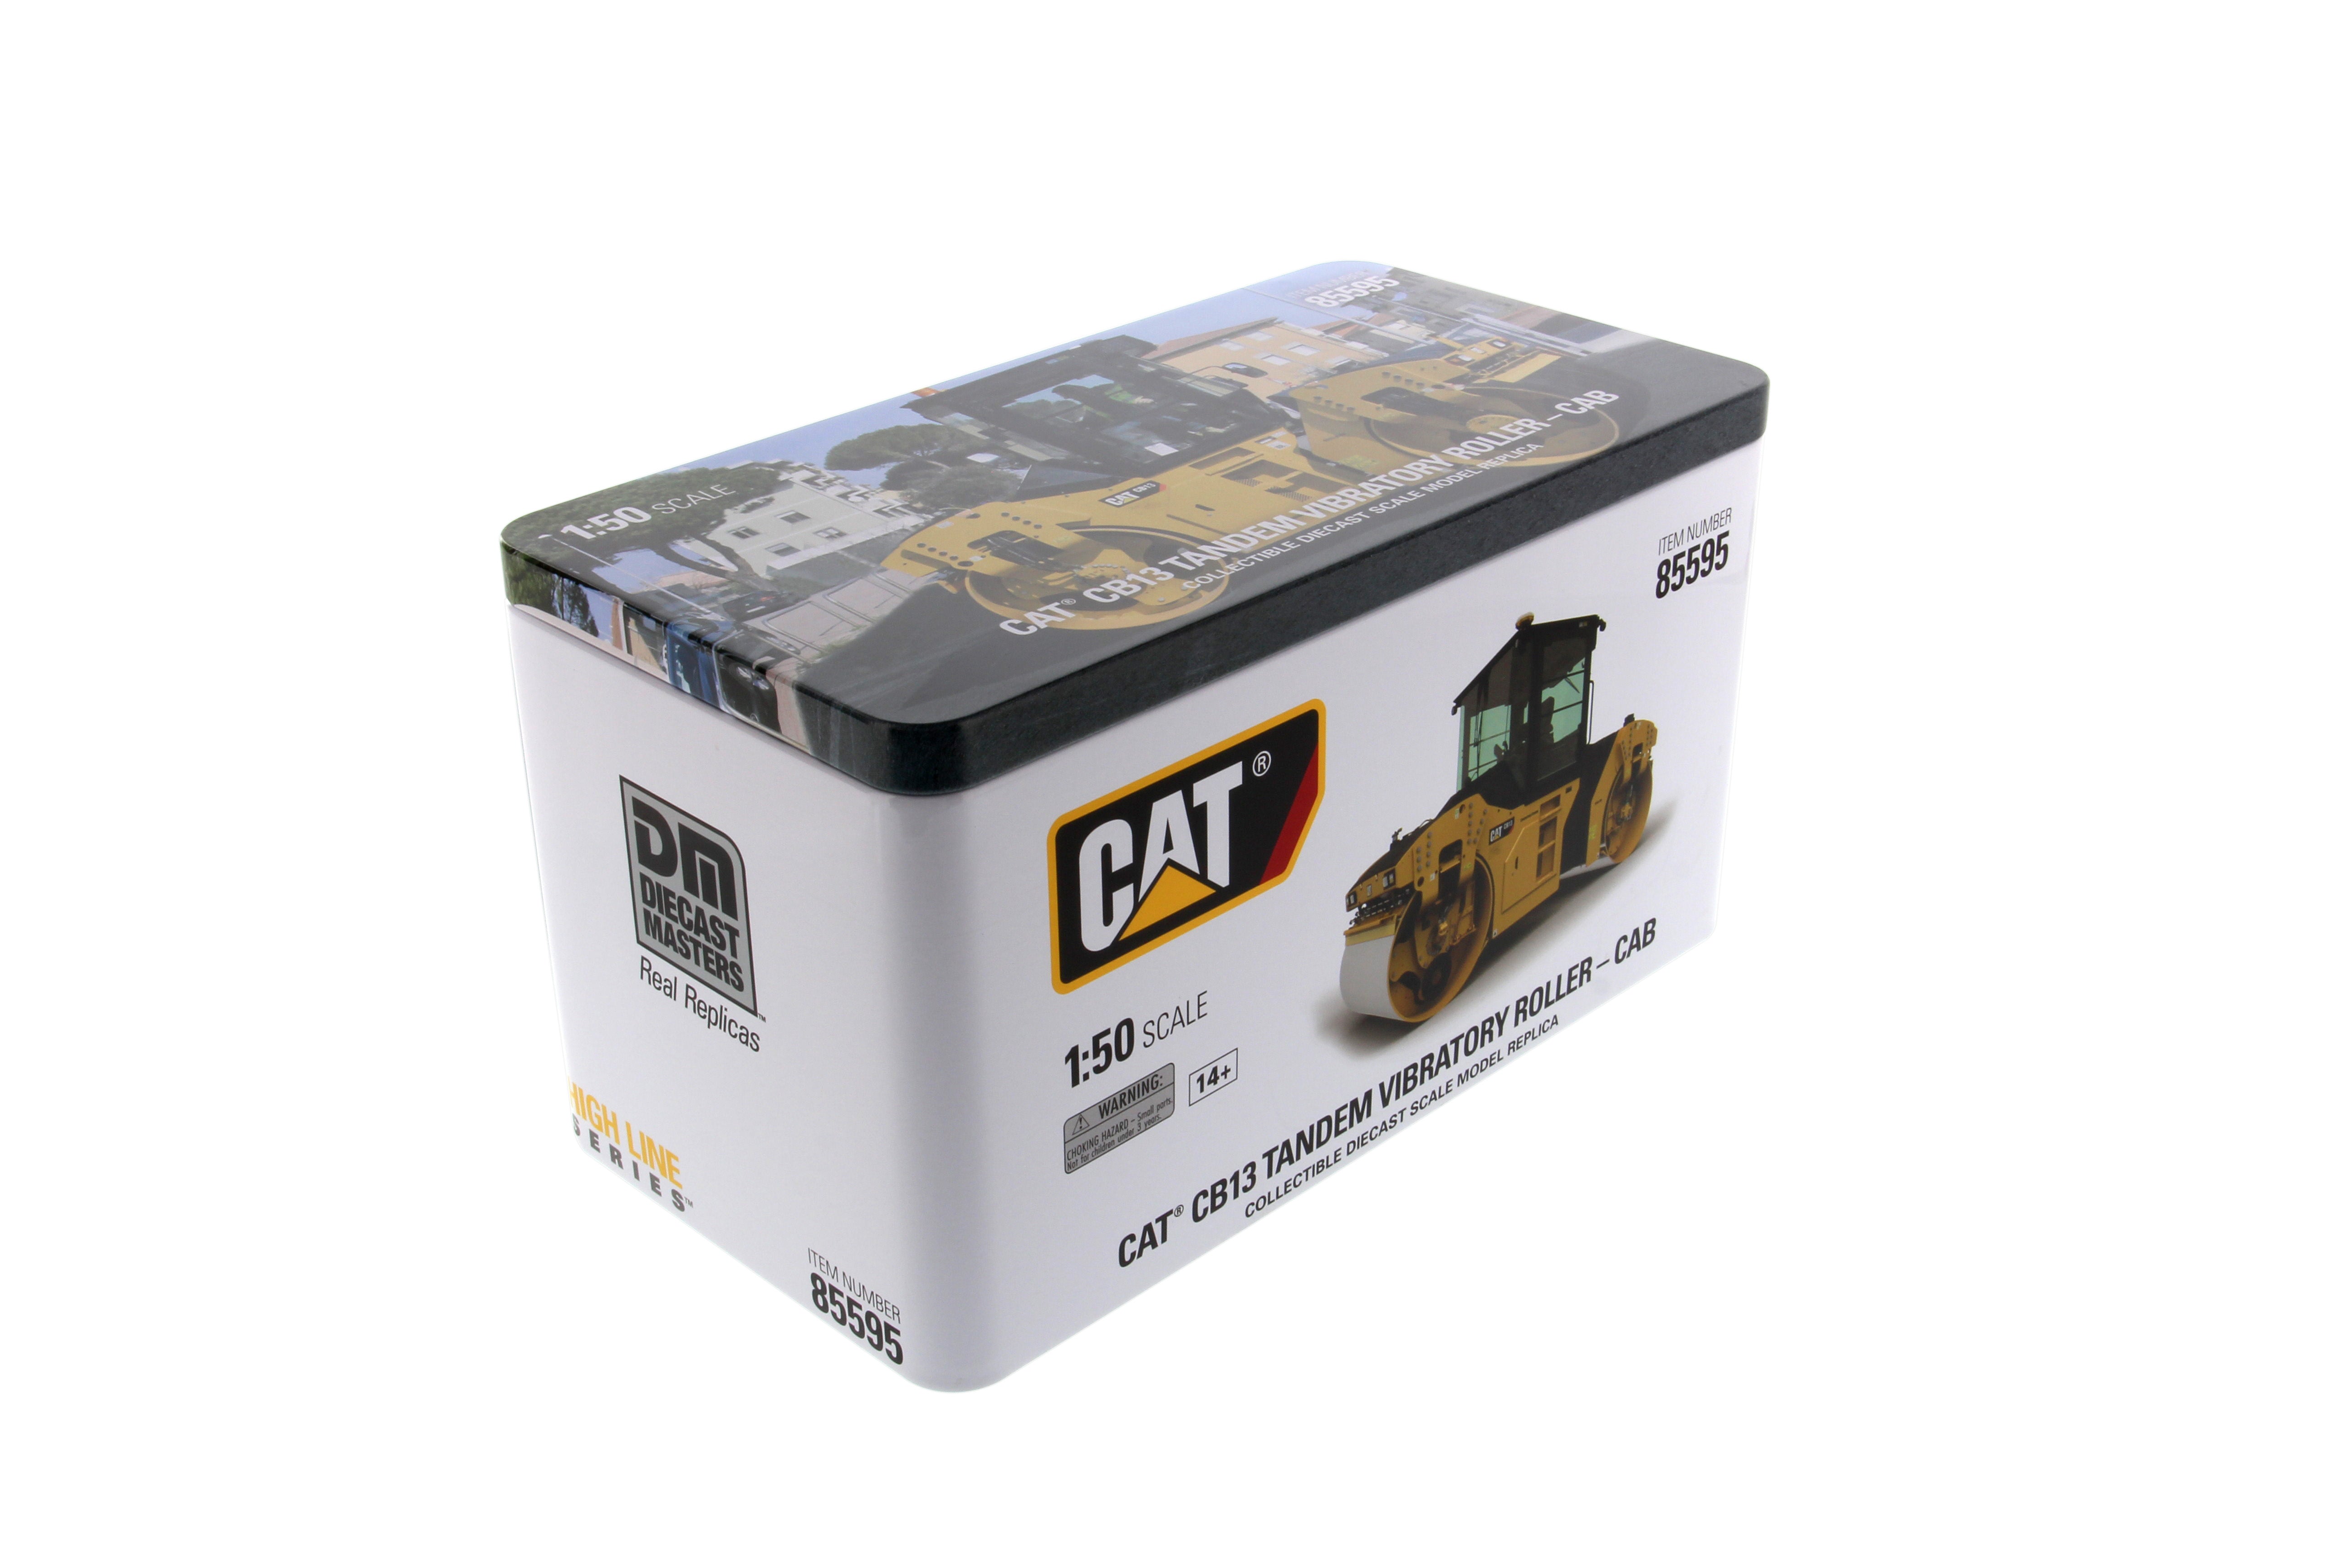 Cat Die Cast CB-13 Tandem Vibratory Roller w/Cab High Line Series 1:50